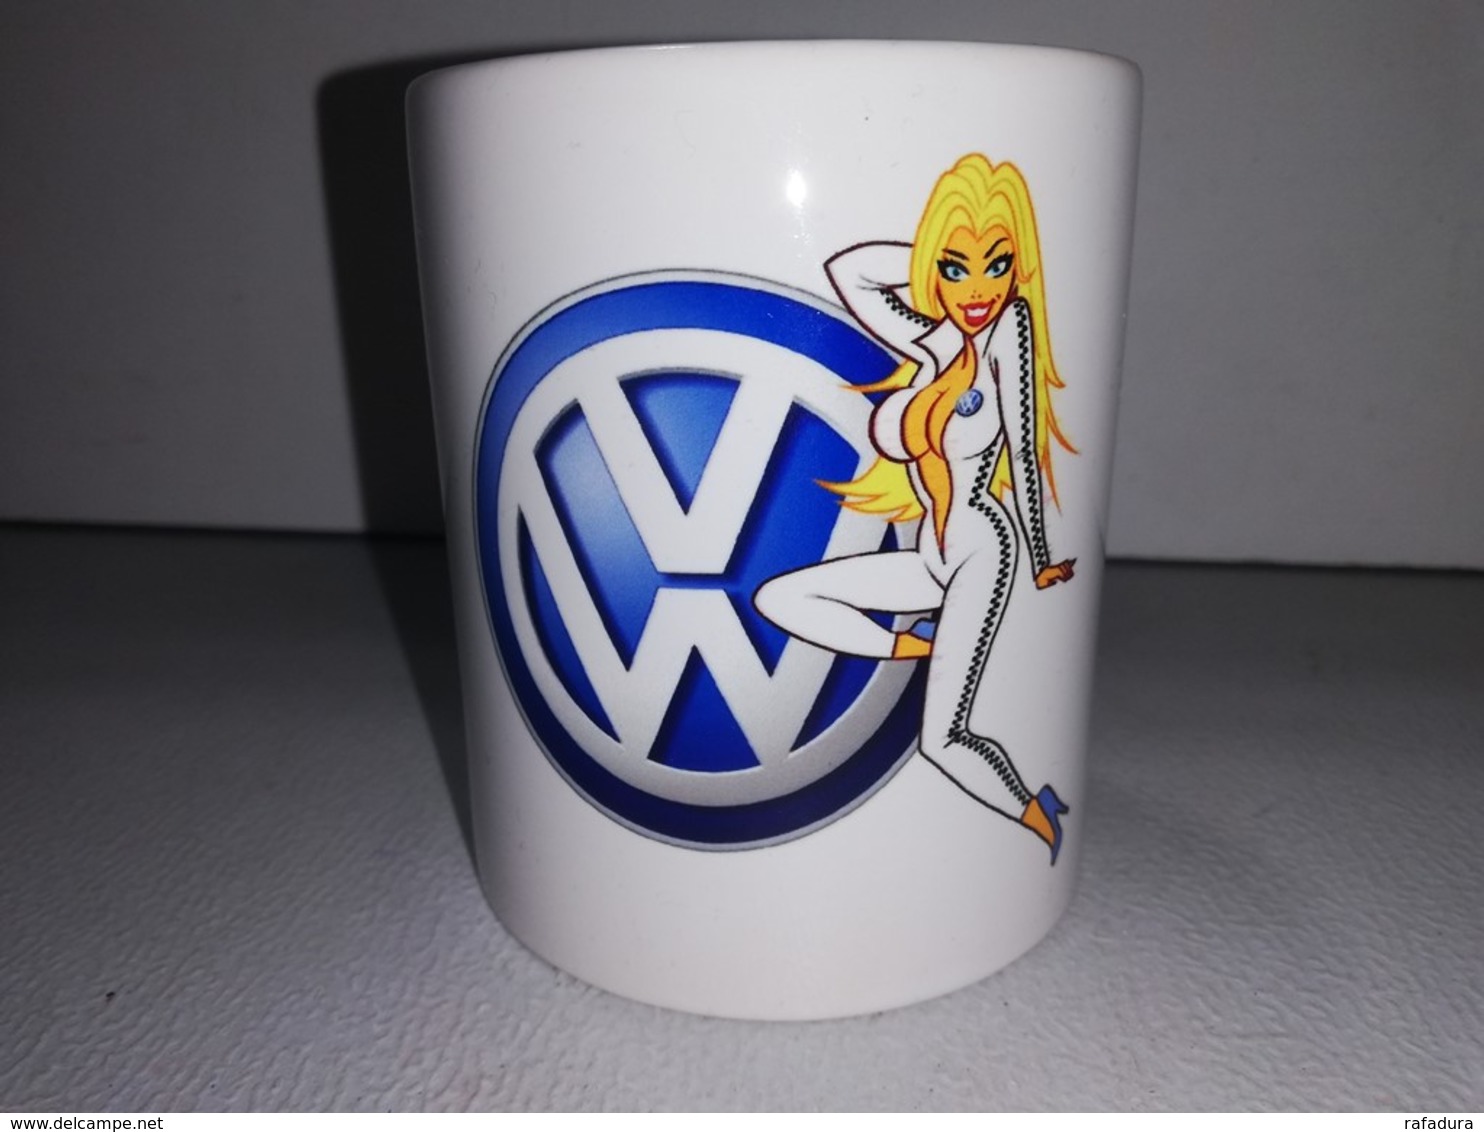 VOLKSWAGEN PIN UP COMBINAISON VW GOLF COX 1303 TASSE Ceramique MUG COFFEE NOEL - Véhicules